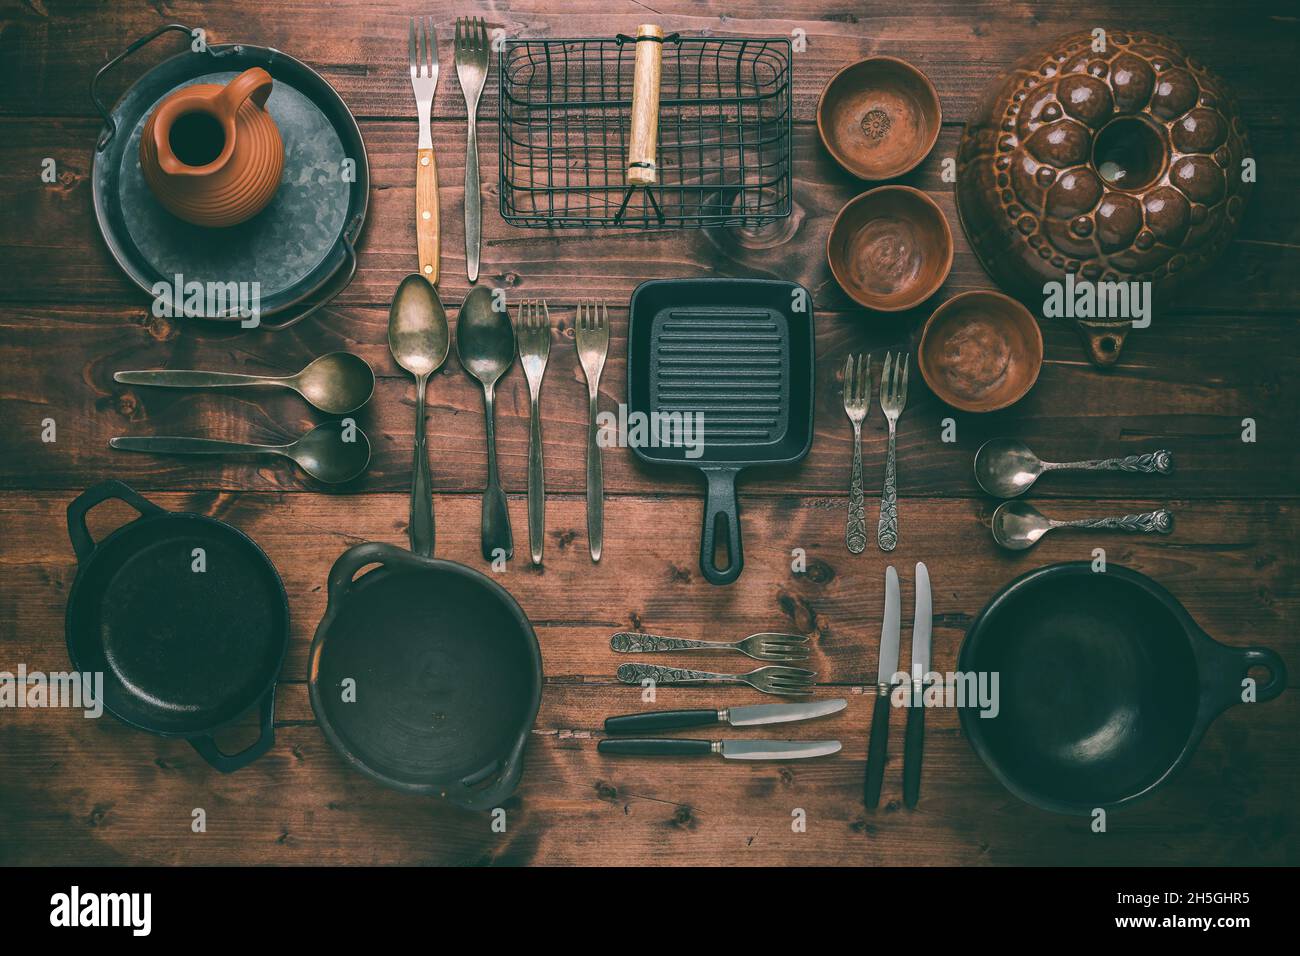 https://c8.alamy.com/comp/2H5GHR5/assortment-of-vintage-kitchen-utensils-on-wooden-table-2H5GHR5.jpg